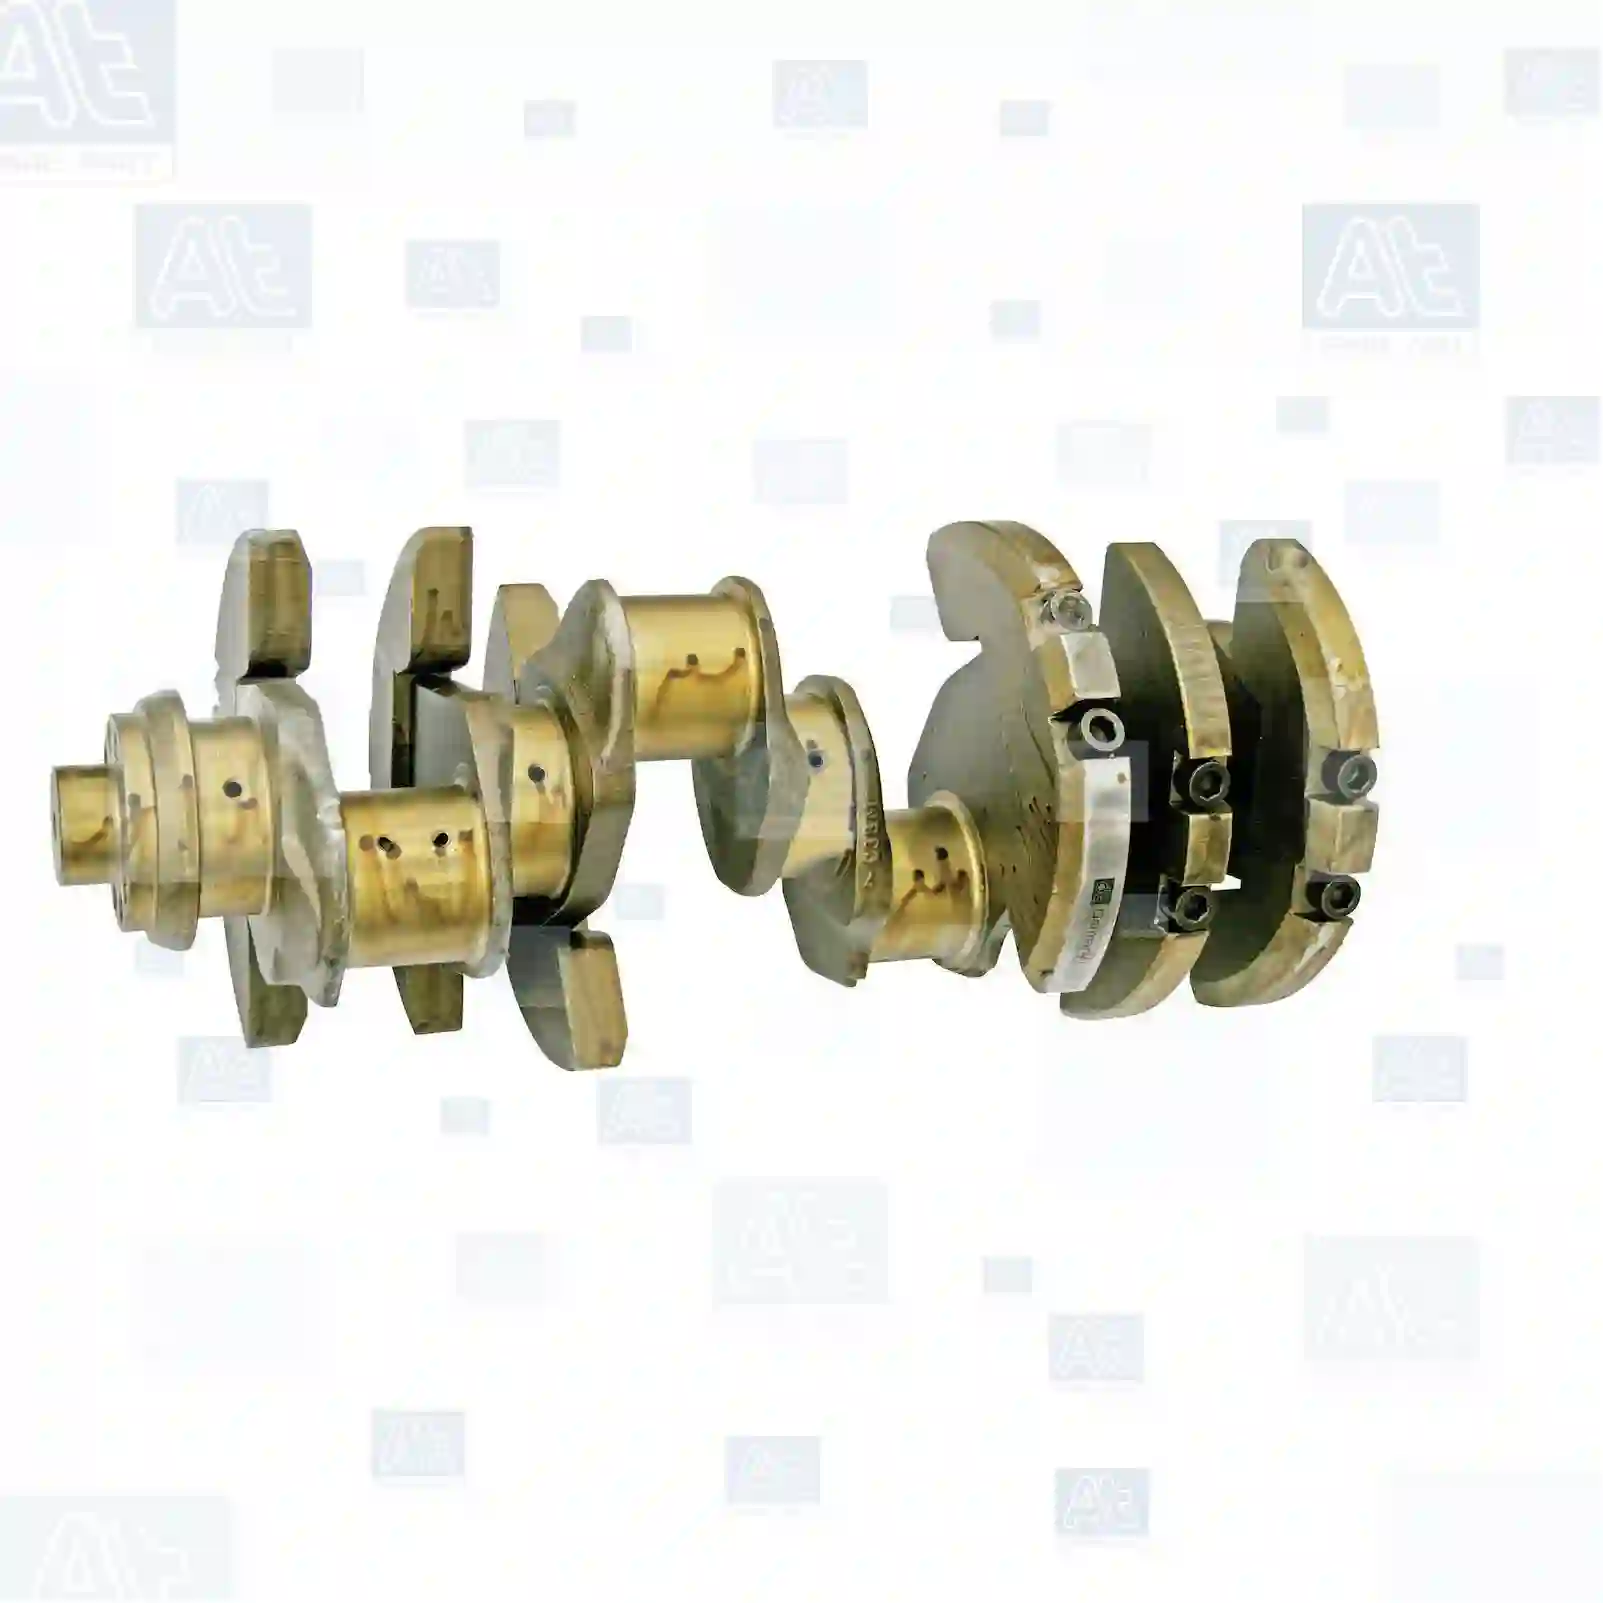 Crankshaft Crankshaft, without bearings, at no: 77701874 ,  oem no:4020302501, 4220300601, 4220301301, 4220301401, 4220302001, 4220302401, 4220303701, 4220303801, 4220304401, 422030440180 At Spare Part | Engine, Accelerator Pedal, Camshaft, Connecting Rod, Crankcase, Crankshaft, Cylinder Head, Engine Suspension Mountings, Exhaust Manifold, Exhaust Gas Recirculation, Filter Kits, Flywheel Housing, General Overhaul Kits, Engine, Intake Manifold, Oil Cleaner, Oil Cooler, Oil Filter, Oil Pump, Oil Sump, Piston & Liner, Sensor & Switch, Timing Case, Turbocharger, Cooling System, Belt Tensioner, Coolant Filter, Coolant Pipe, Corrosion Prevention Agent, Drive, Expansion Tank, Fan, Intercooler, Monitors & Gauges, Radiator, Thermostat, V-Belt / Timing belt, Water Pump, Fuel System, Electronical Injector Unit, Feed Pump, Fuel Filter, cpl., Fuel Gauge Sender,  Fuel Line, Fuel Pump, Fuel Tank, Injection Line Kit, Injection Pump, Exhaust System, Clutch & Pedal, Gearbox, Propeller Shaft, Axles, Brake System, Hubs & Wheels, Suspension, Leaf Spring, Universal Parts / Accessories, Steering, Electrical System, Cabin